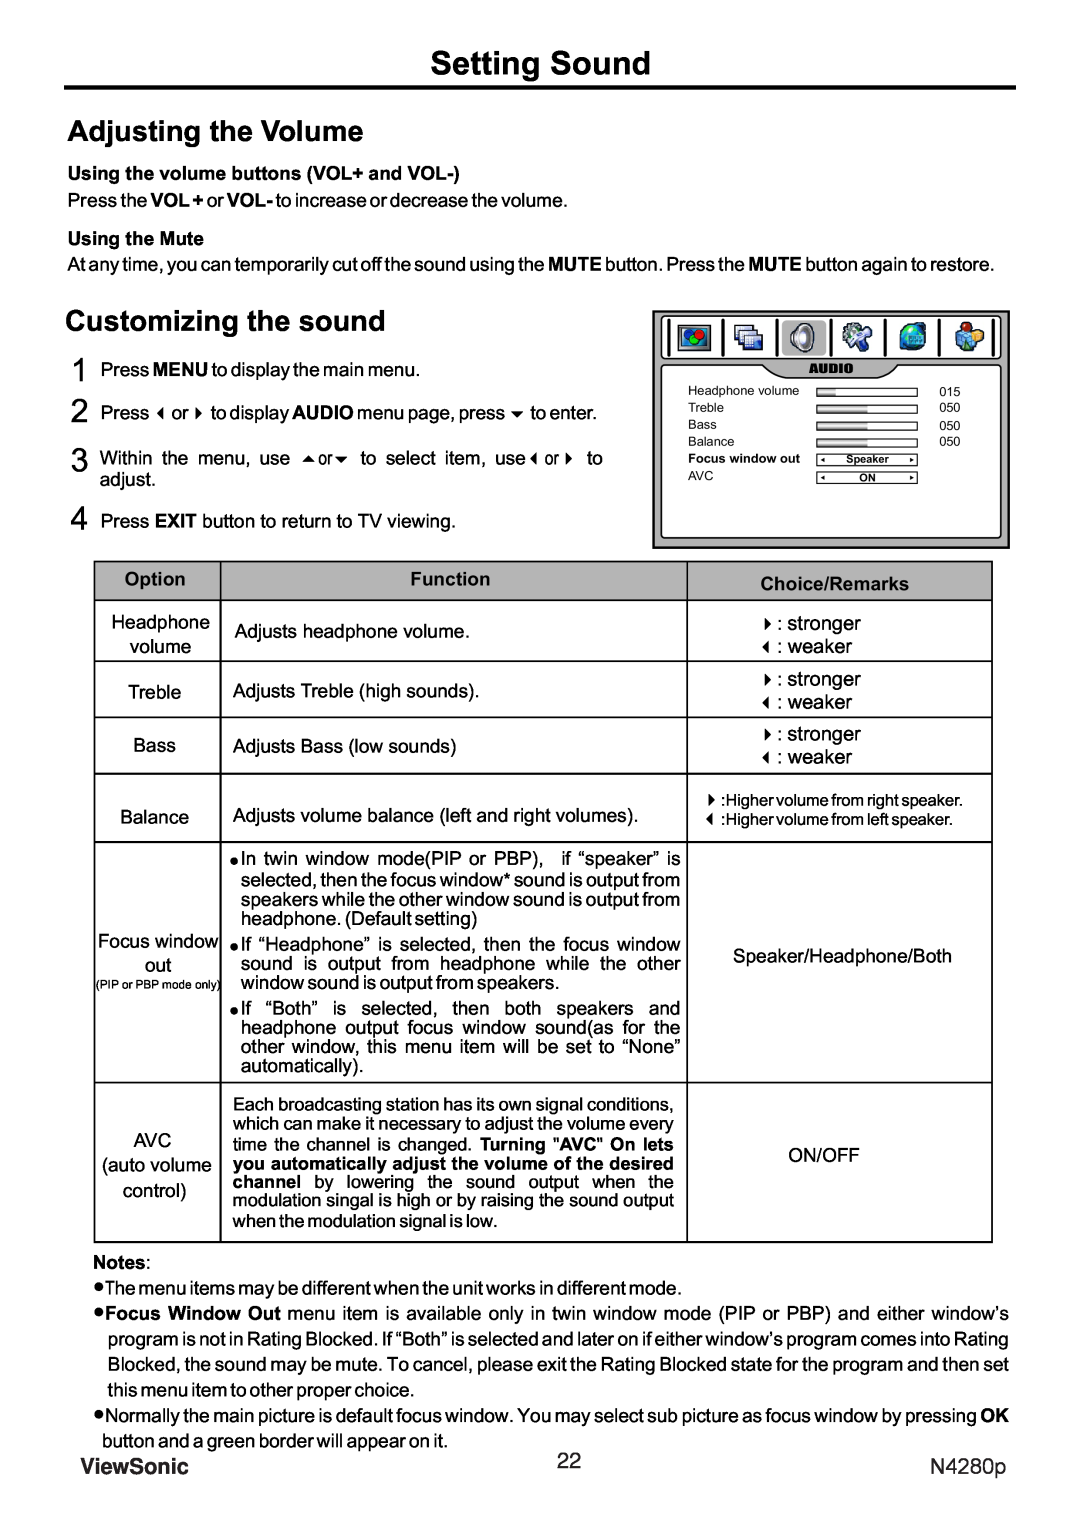 ViewSonic N4280p manual Setting Sound, Adjusting the Volume, Customizing the sound, ViewSonic 